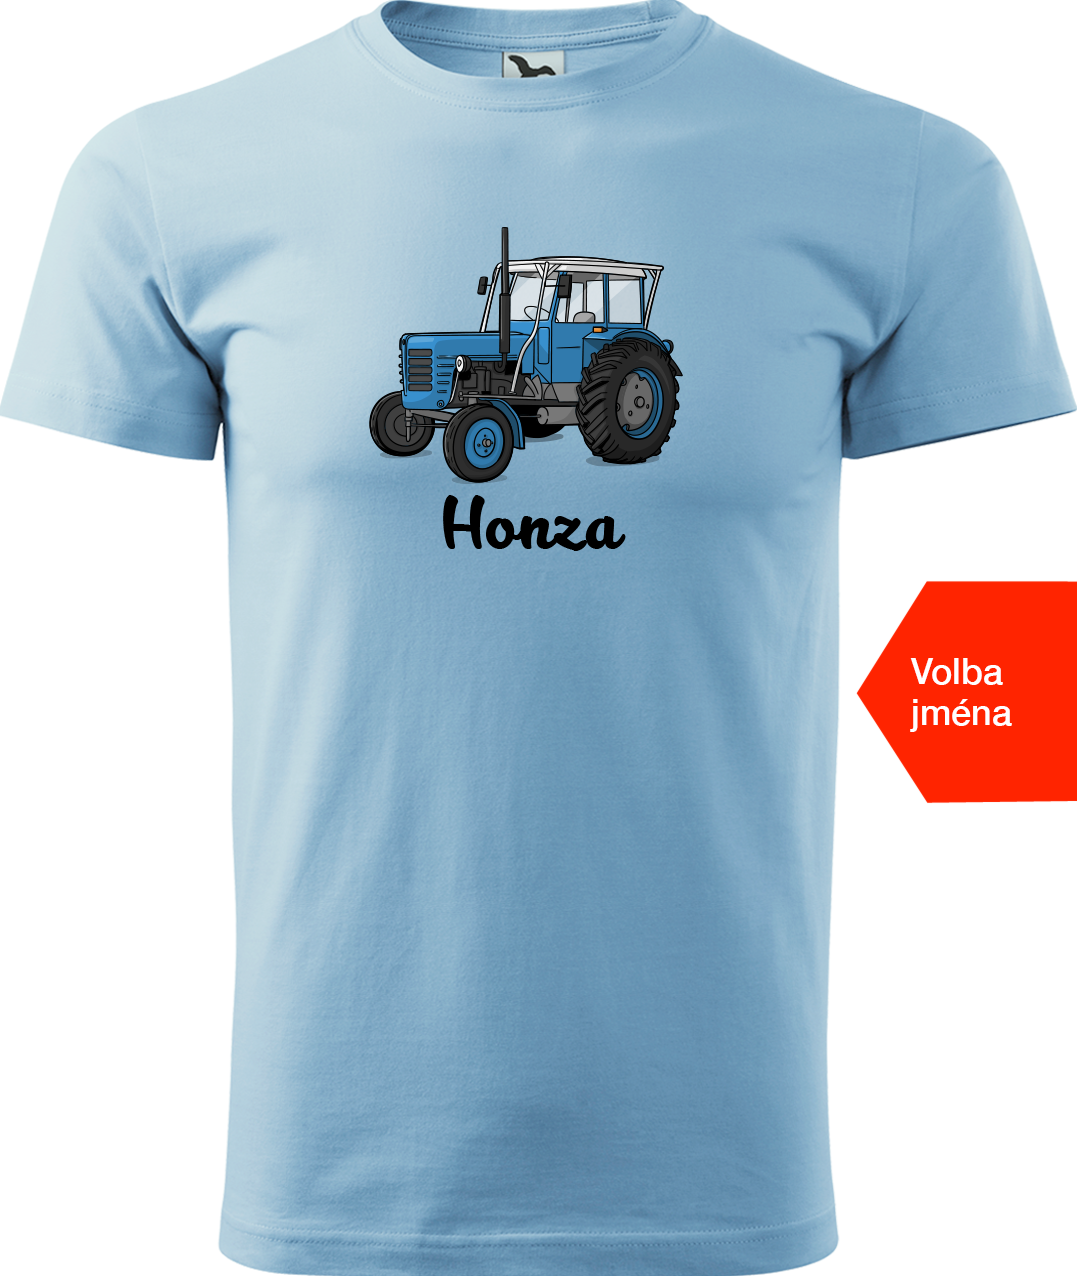 Tričko s traktorem a jménem - Starý traktor Velikost: M, Barva: Nebesky modrá (15)